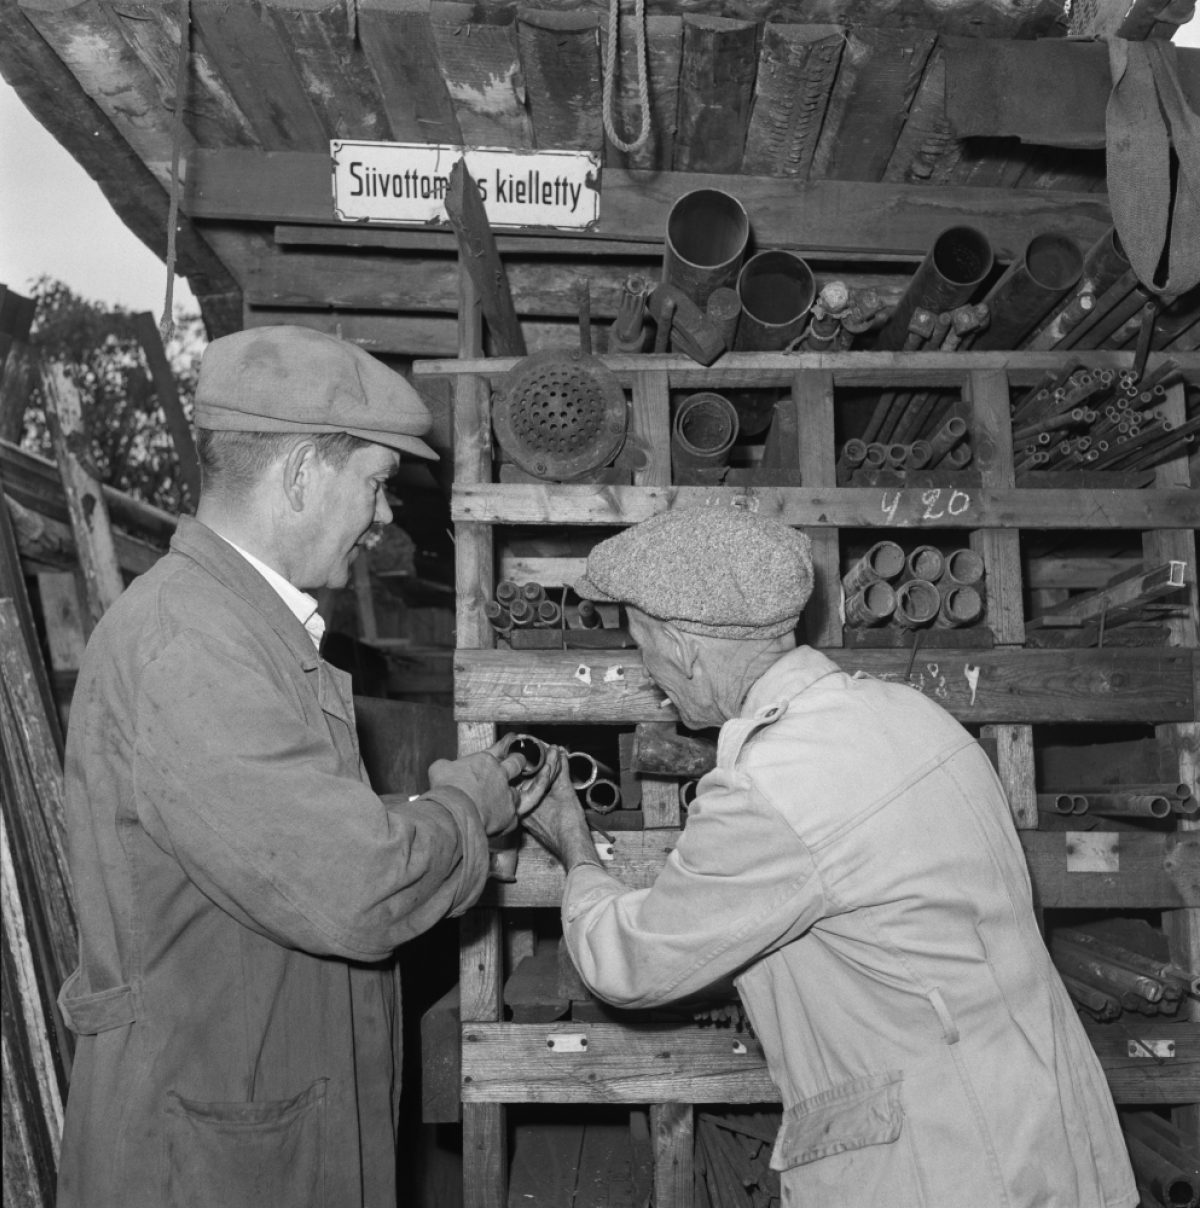 Recycling of scrap metal in Helsinki in 1958. Photo: UA Saarinen / Press Photo Archive JOKA / Finnish Heritage Agency